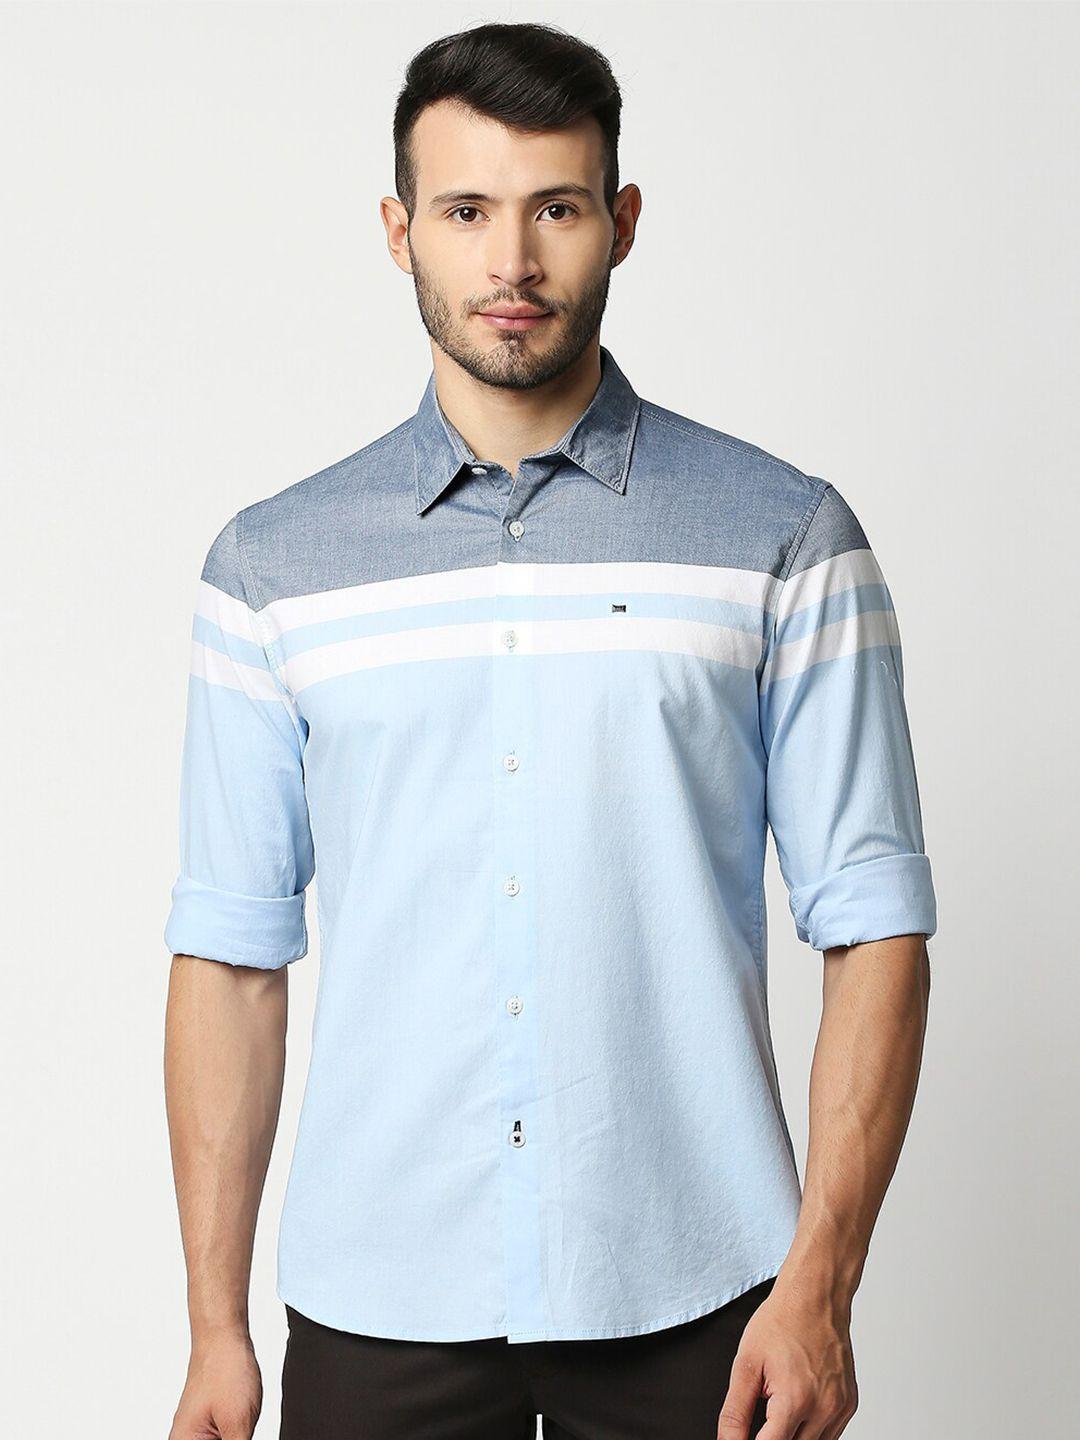 basics men blue cotton slim fit horizontal striped casual shirt